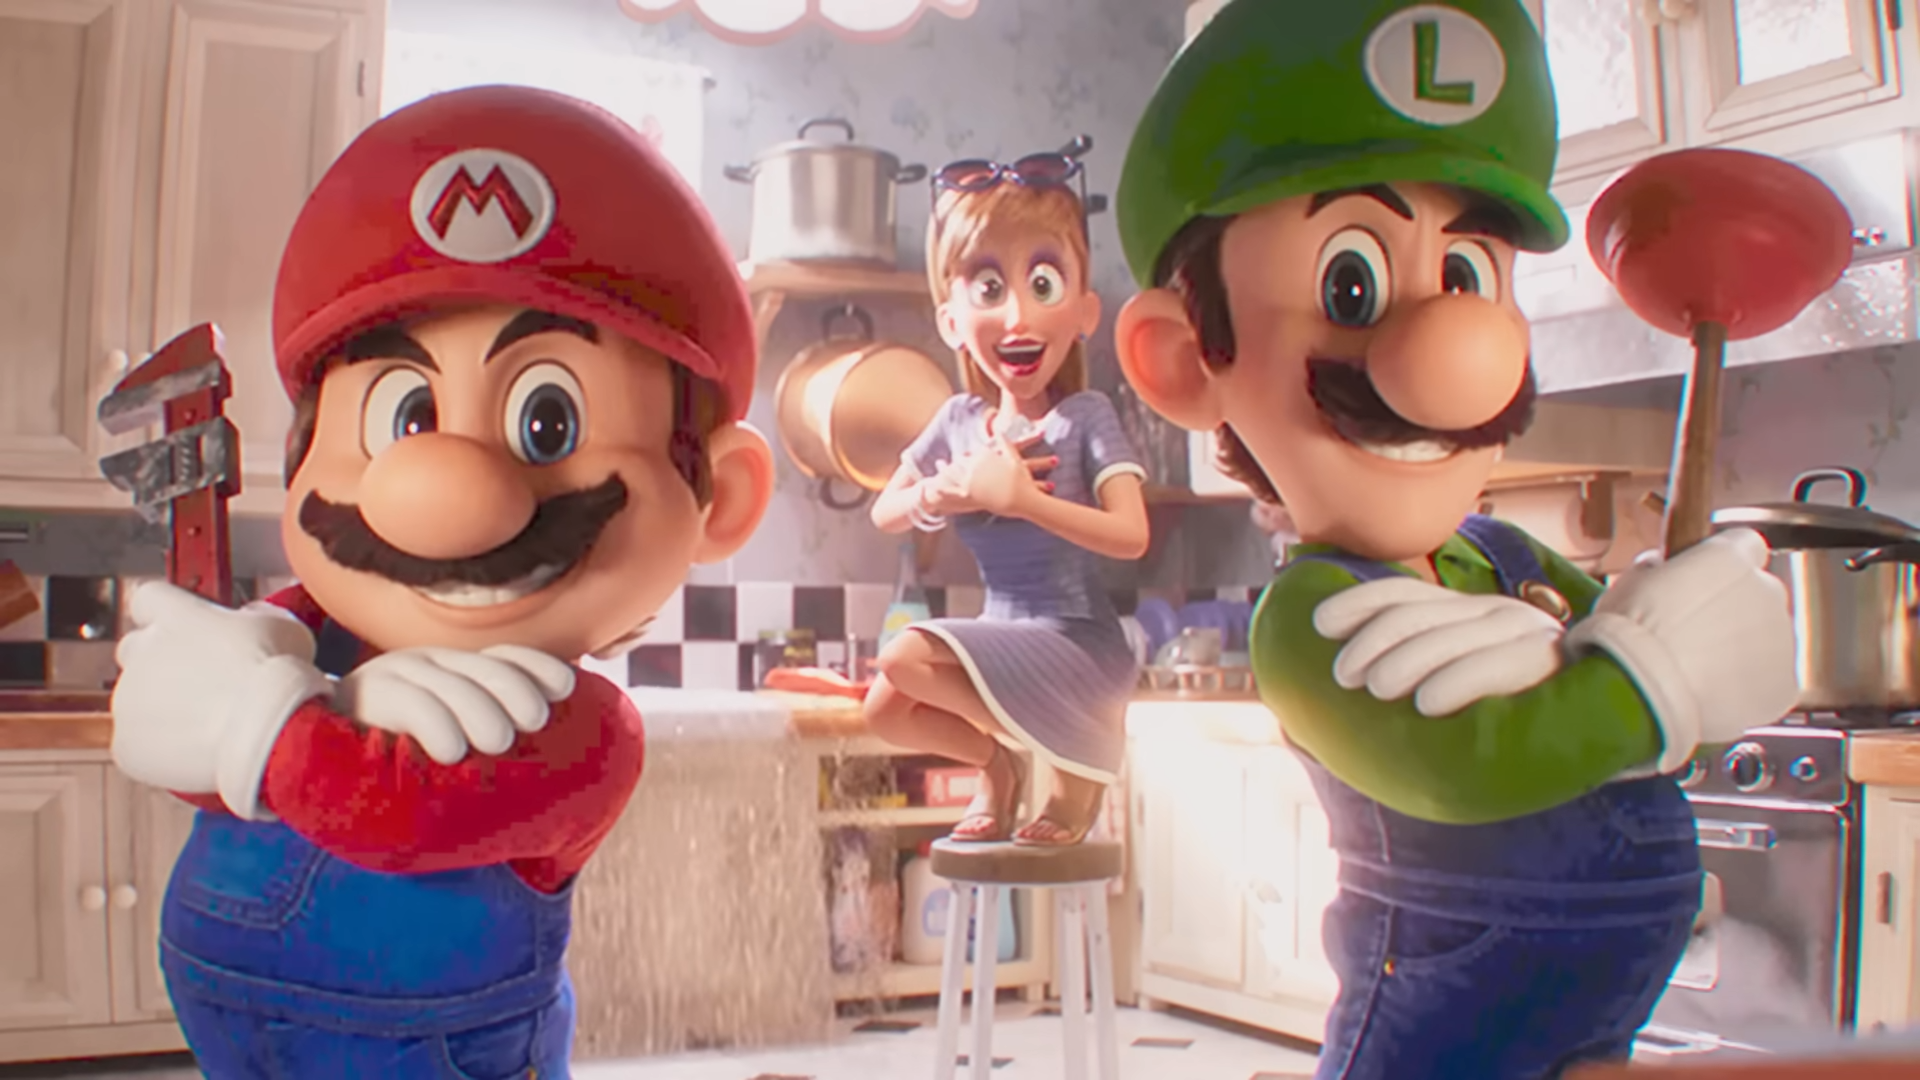 Super Mario Bros. Movie postcredit scene hints at potential sequel